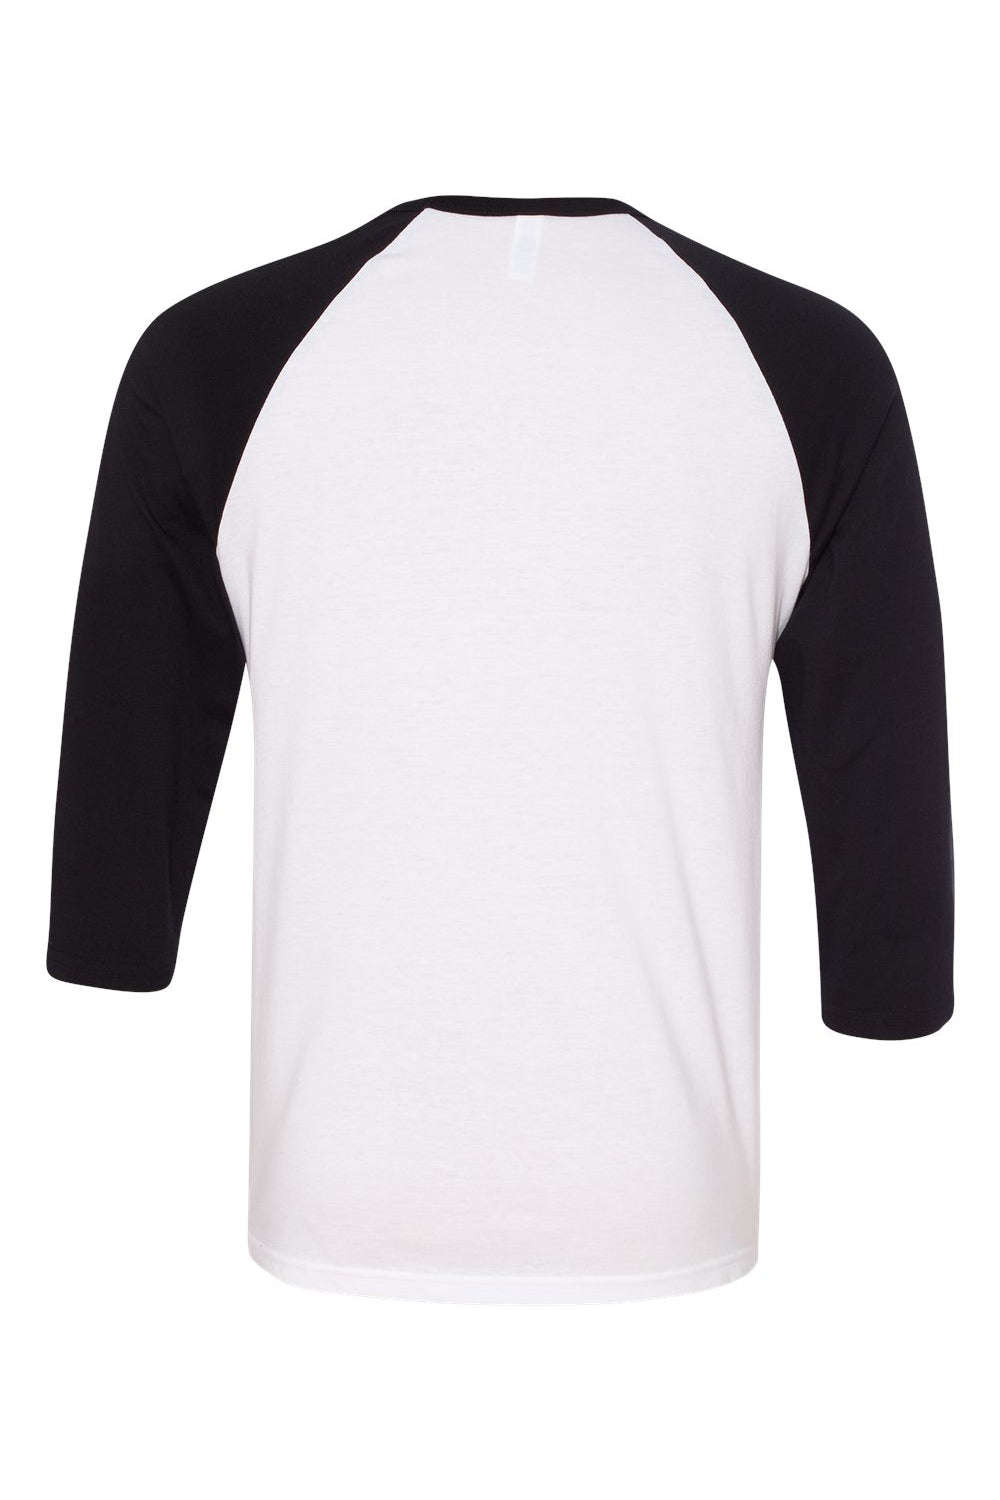 Bella + Canvas BC3200/3200 Mens 3/4 Sleeve Crewneck T-Shirt White/Black Flat Back